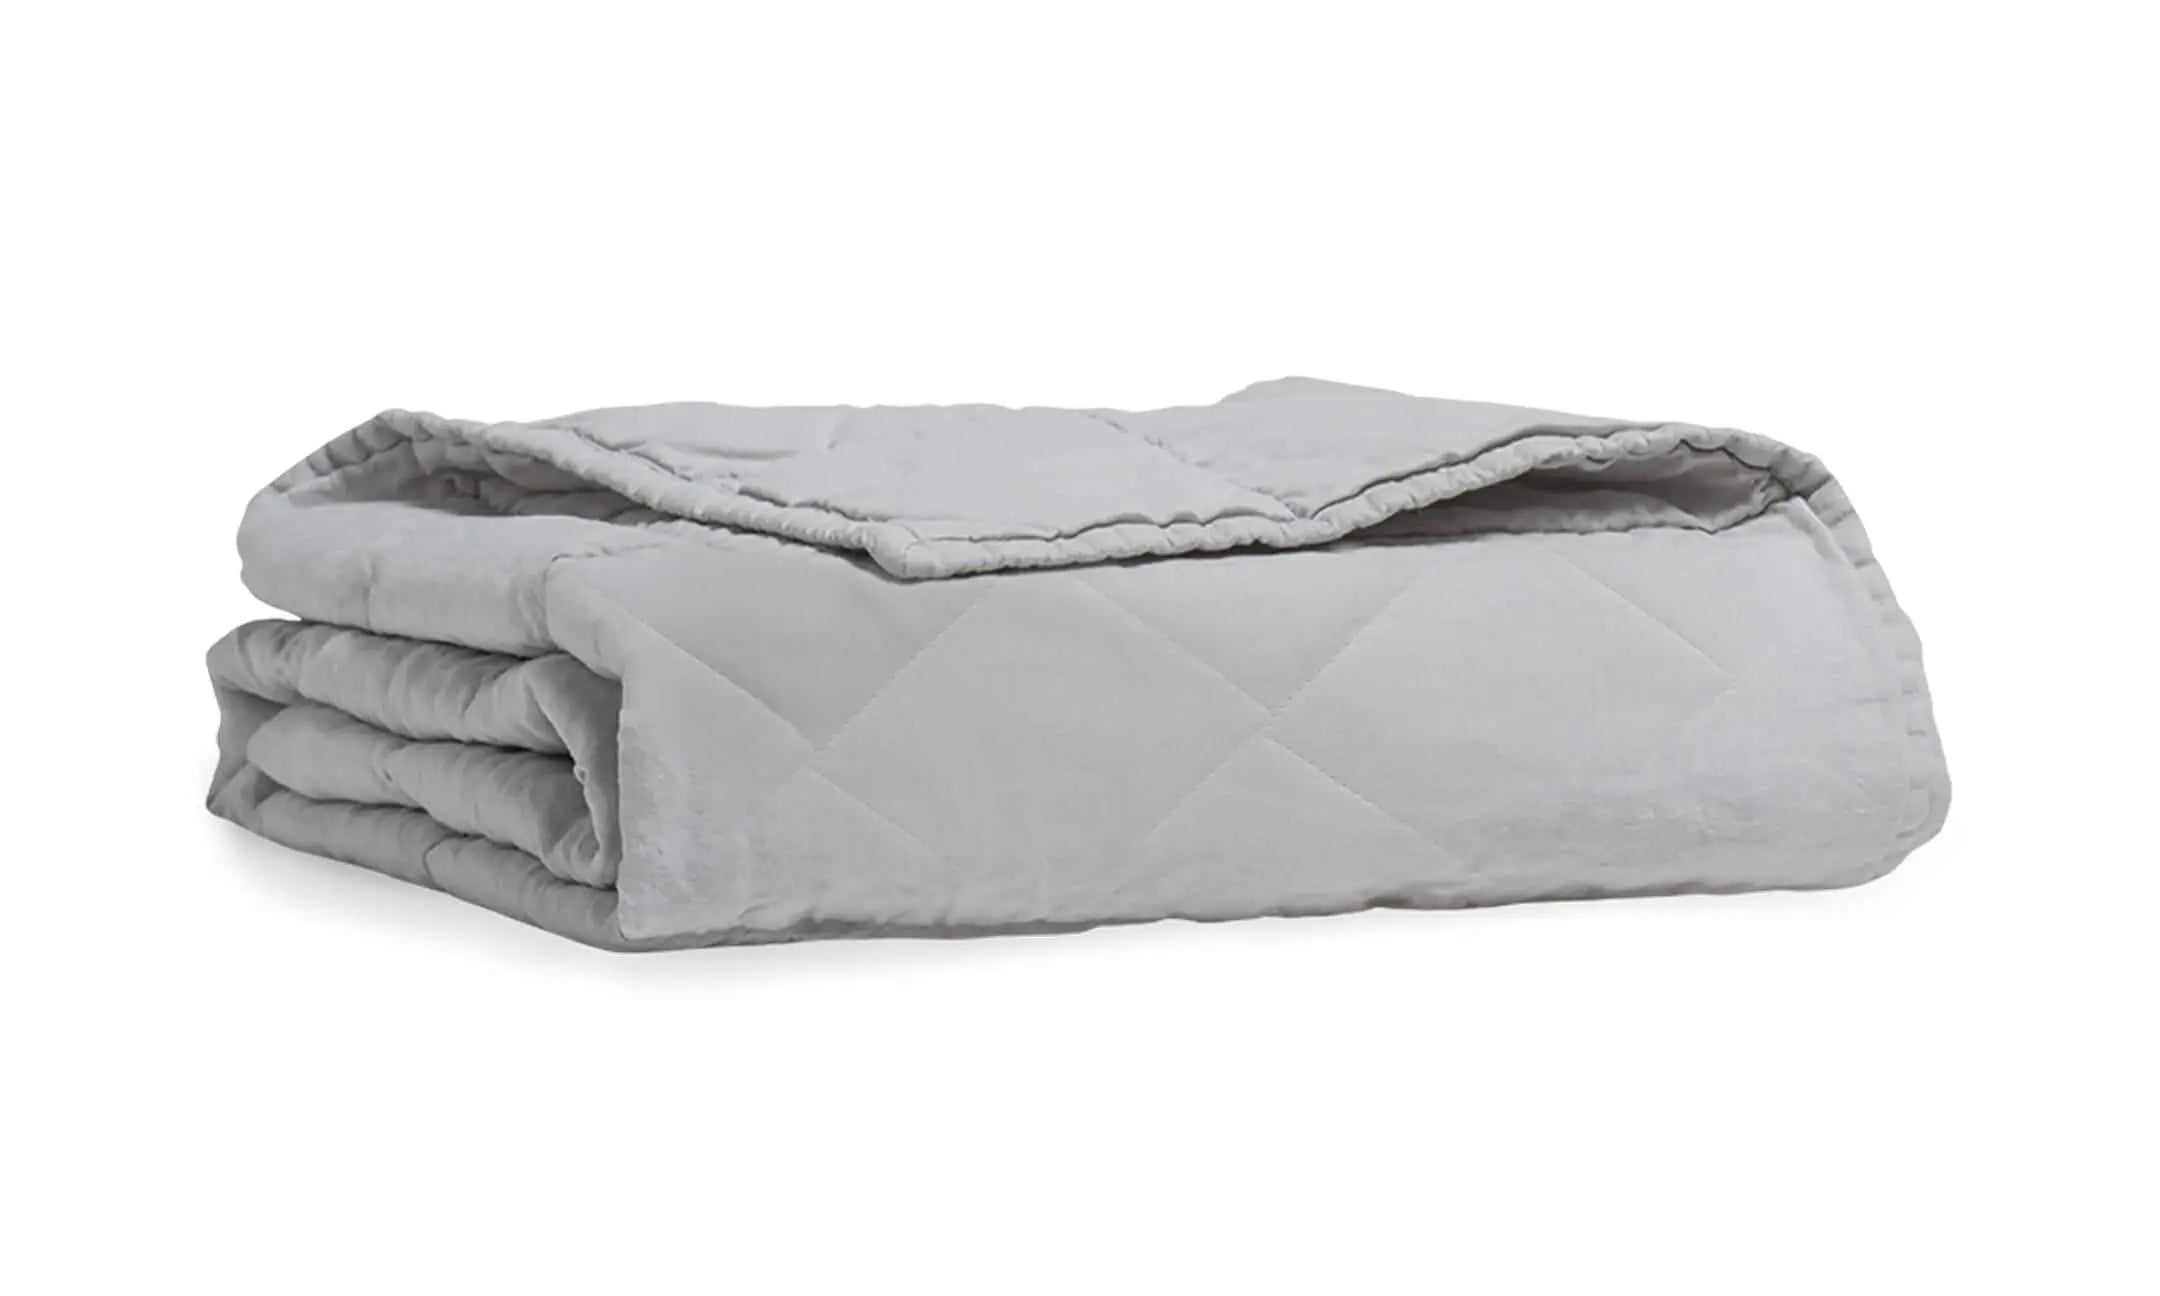 Puffy Weighted Blanket - Mattress Brands Puffy bedding